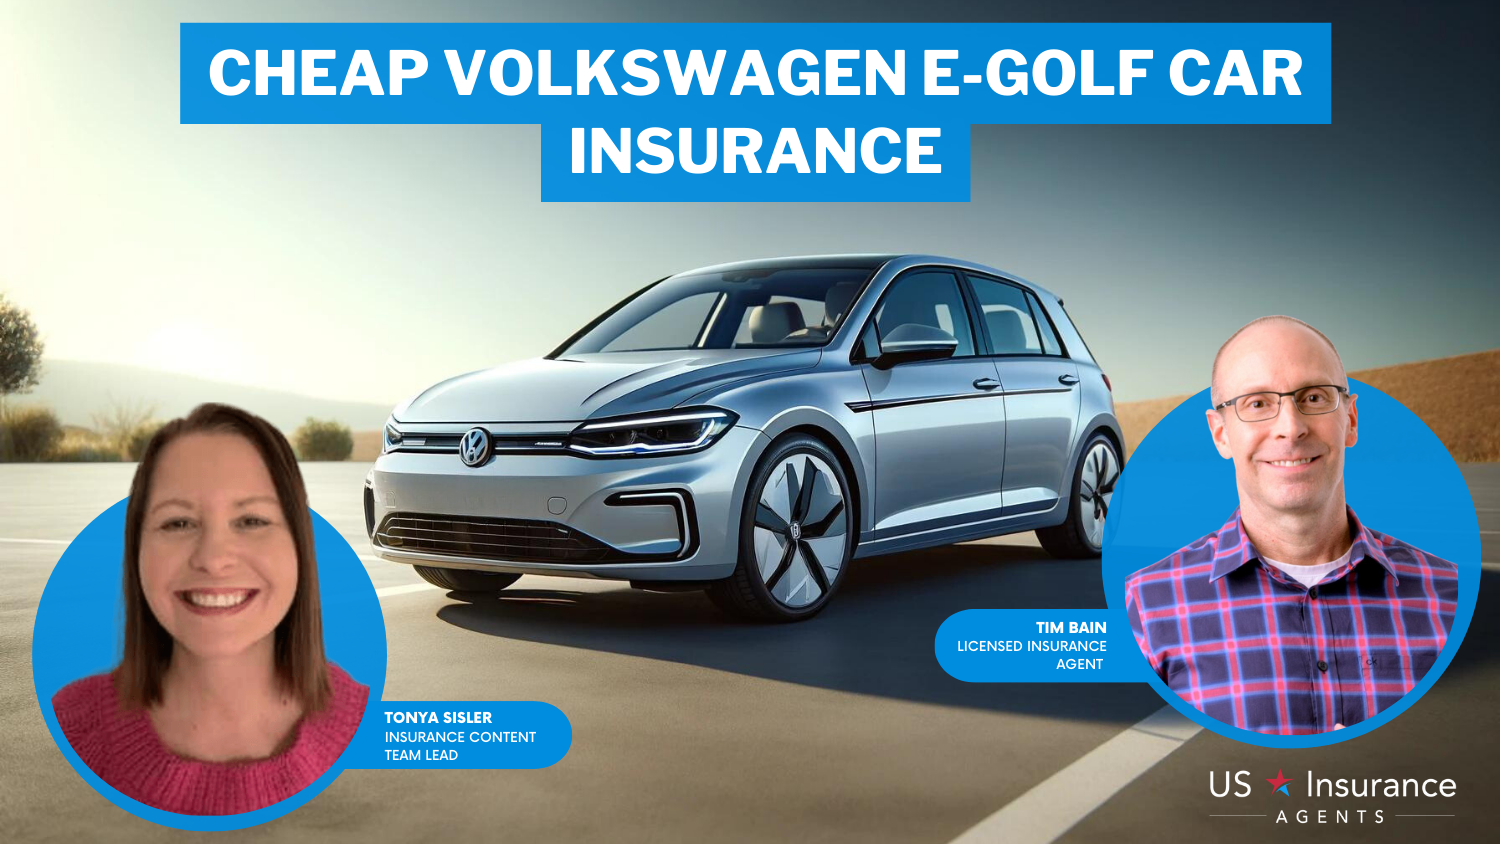 Cheap Volkswagen e-Golf Car Insurance: Safeco, USAA, and The Hartford